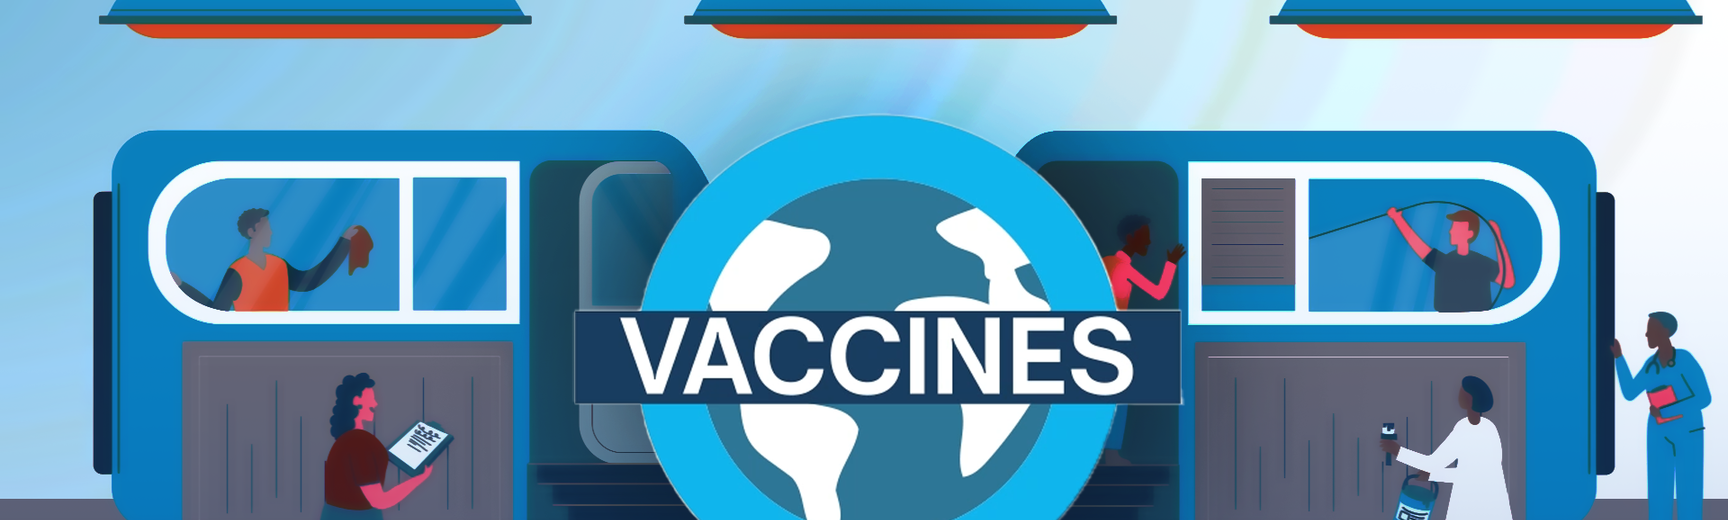 general vaccine info